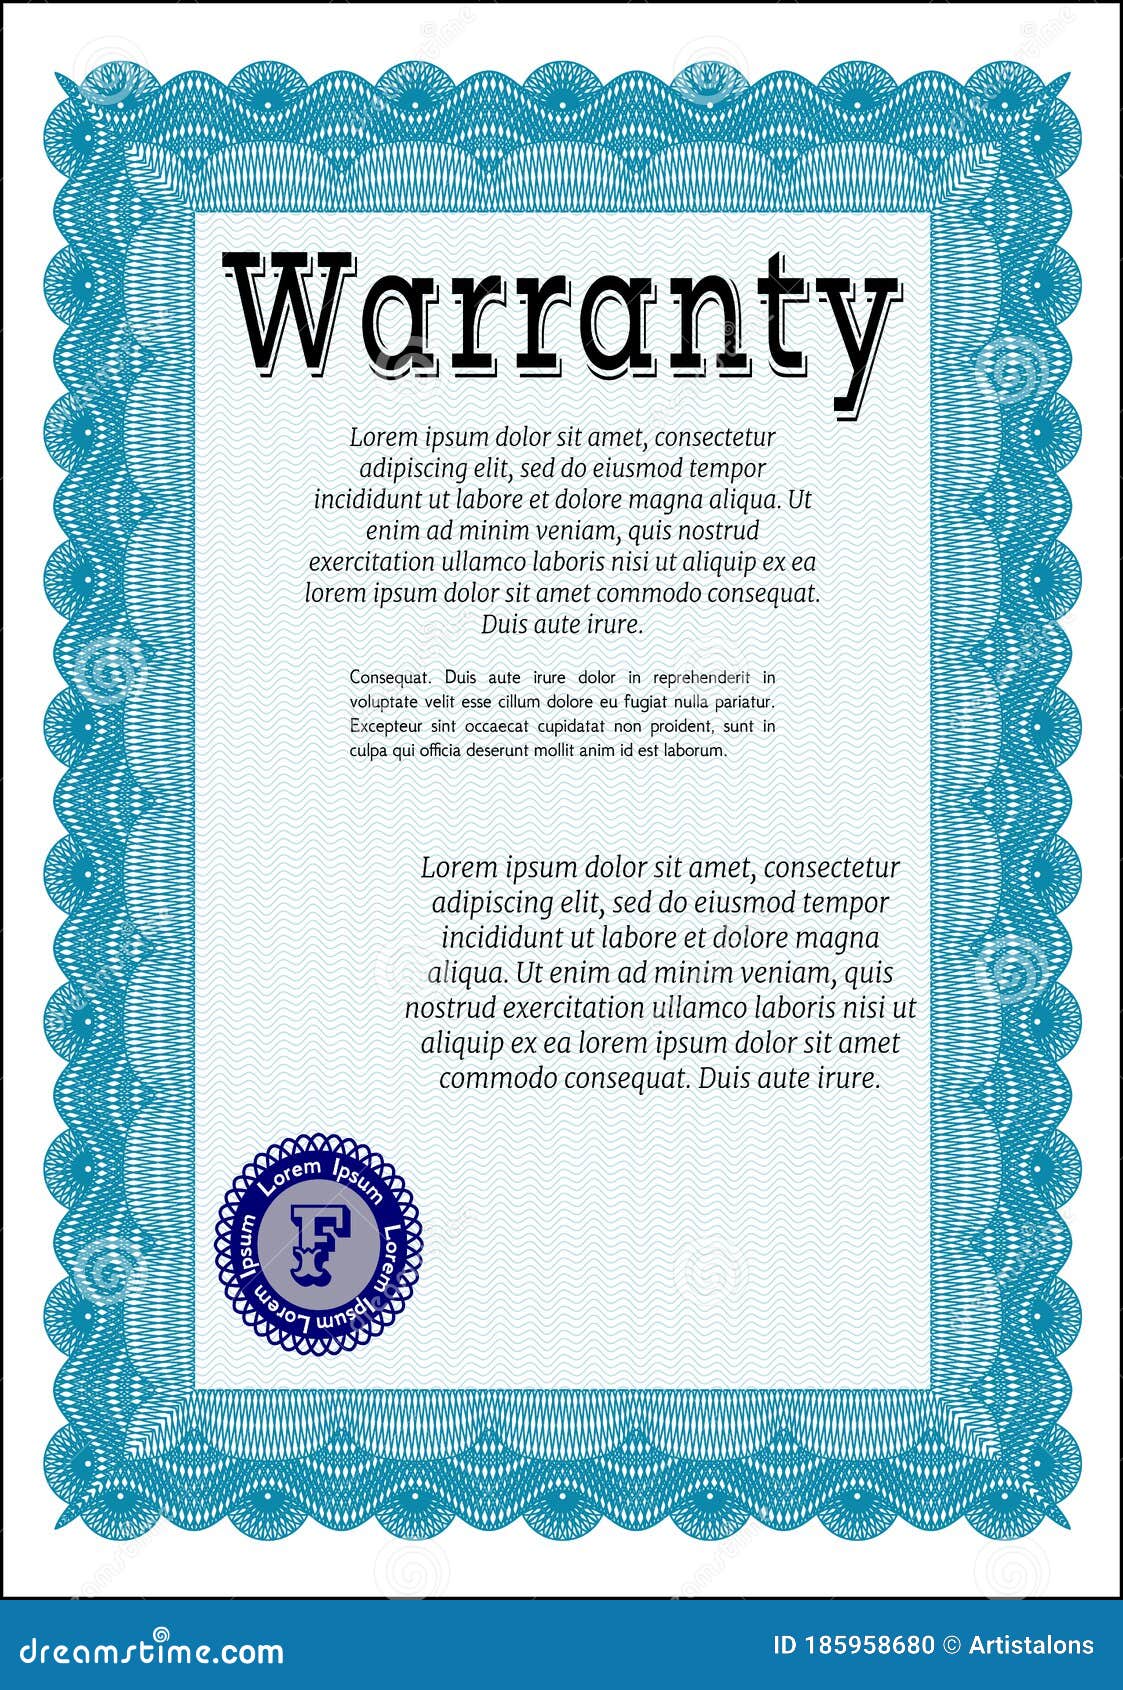 warranty card design